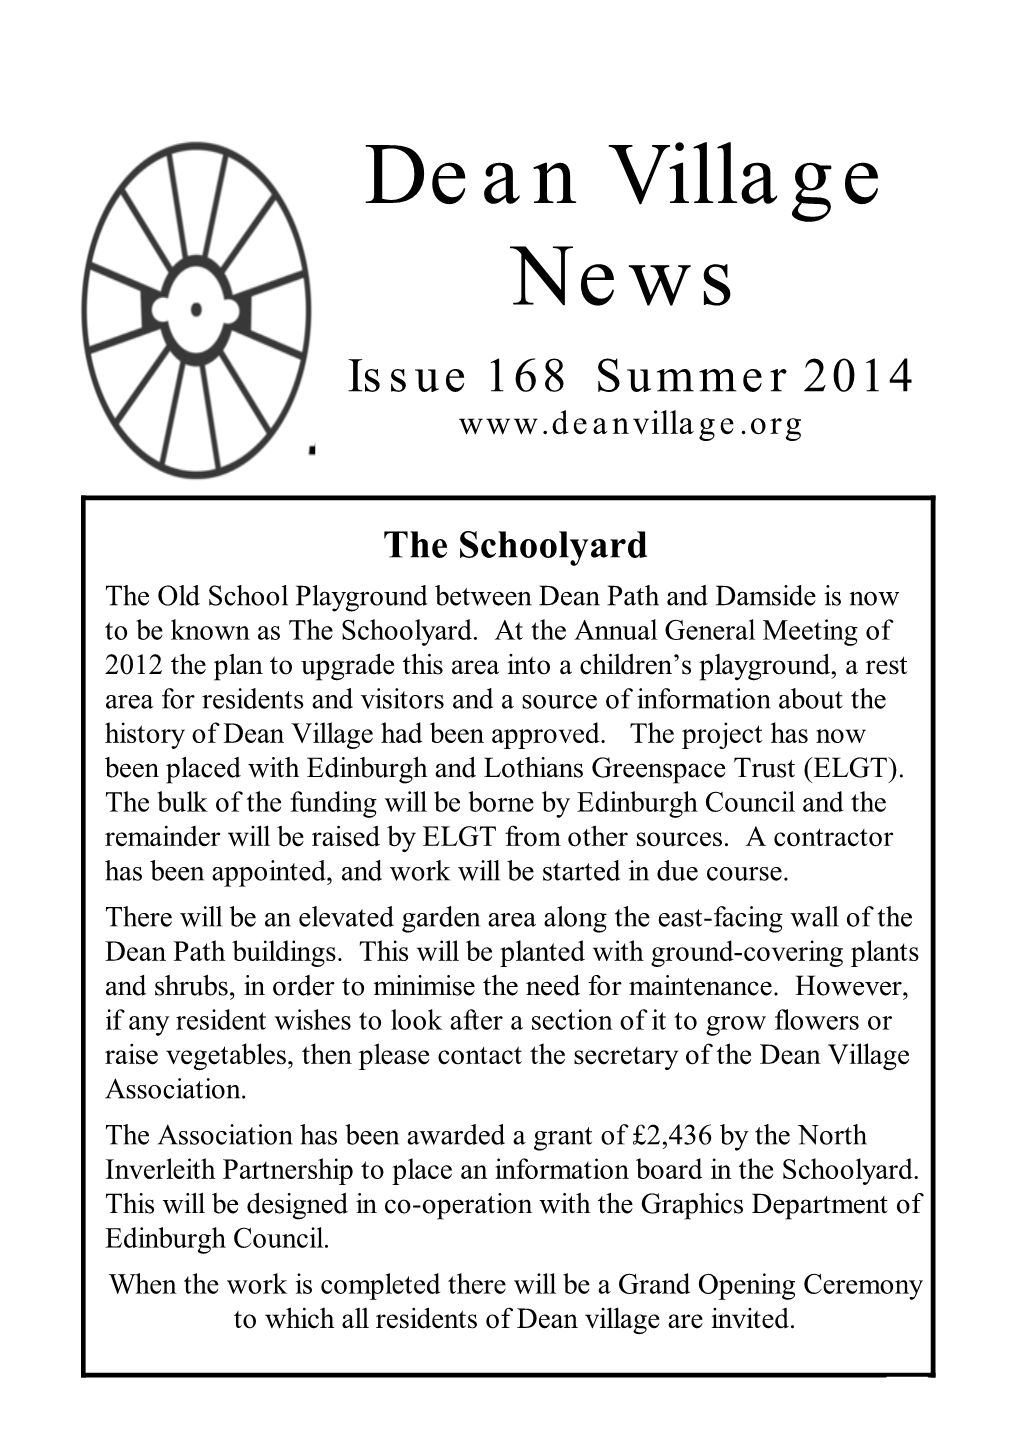 Issue 168: Summer 2014